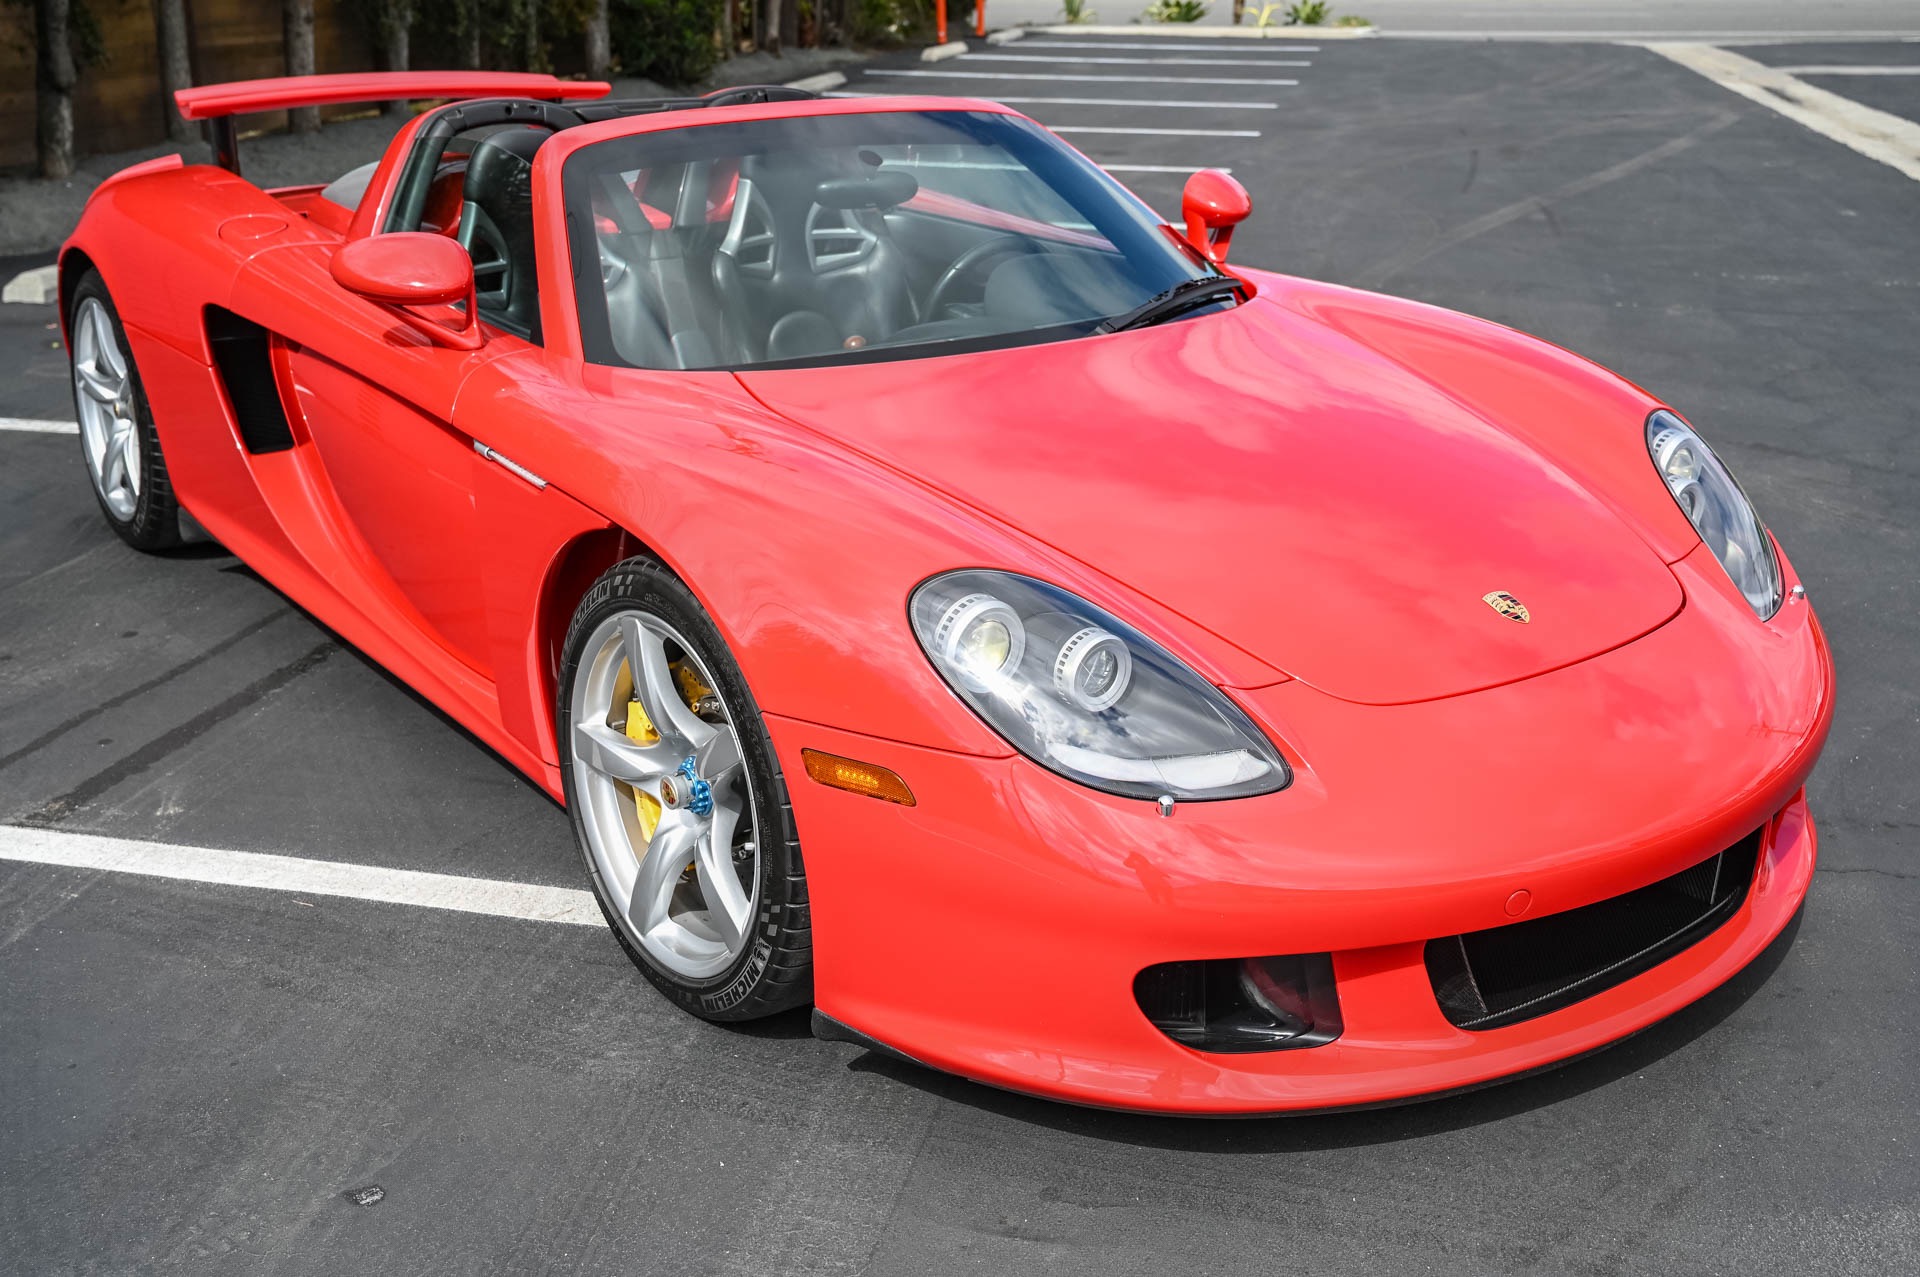 Used 2005 Porsche Carrera GT For Sale ($1,650,000) | iLusso Stock #001567